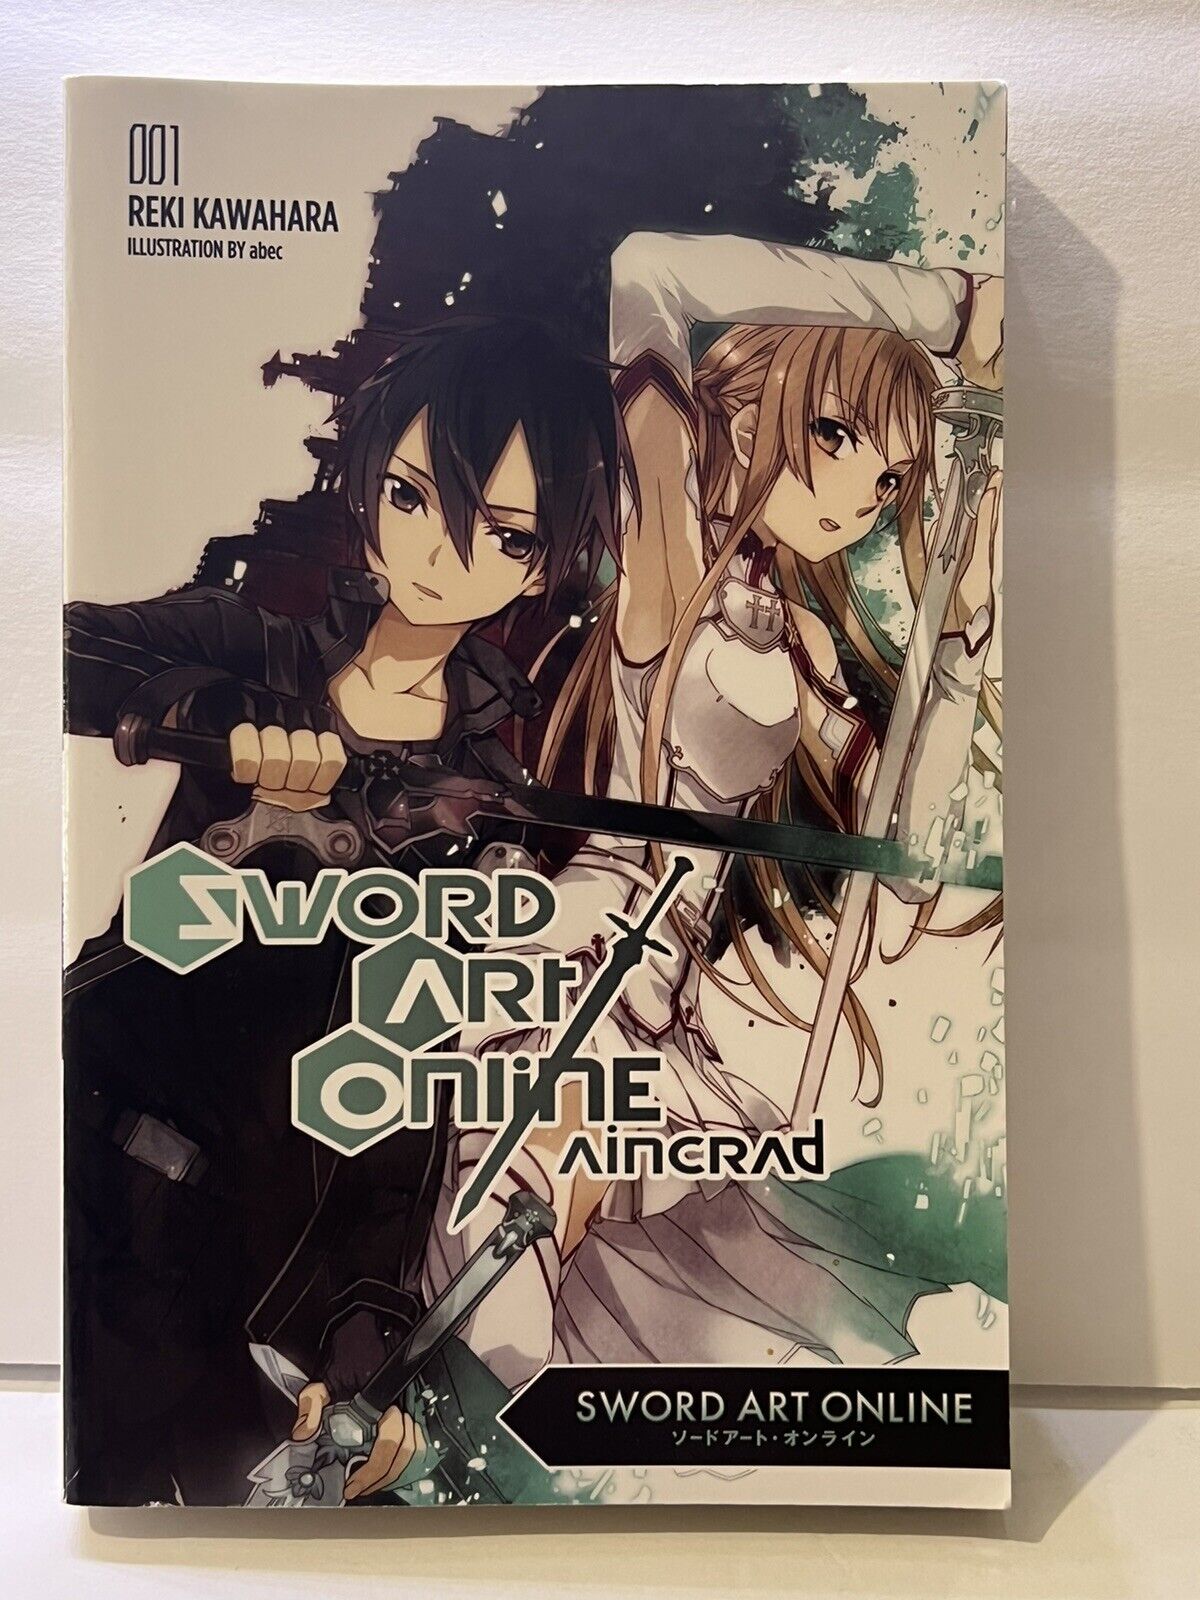 Sword Art Online Ser.: Sword Art Online 1: Aincrad (light Novel) by Reki...